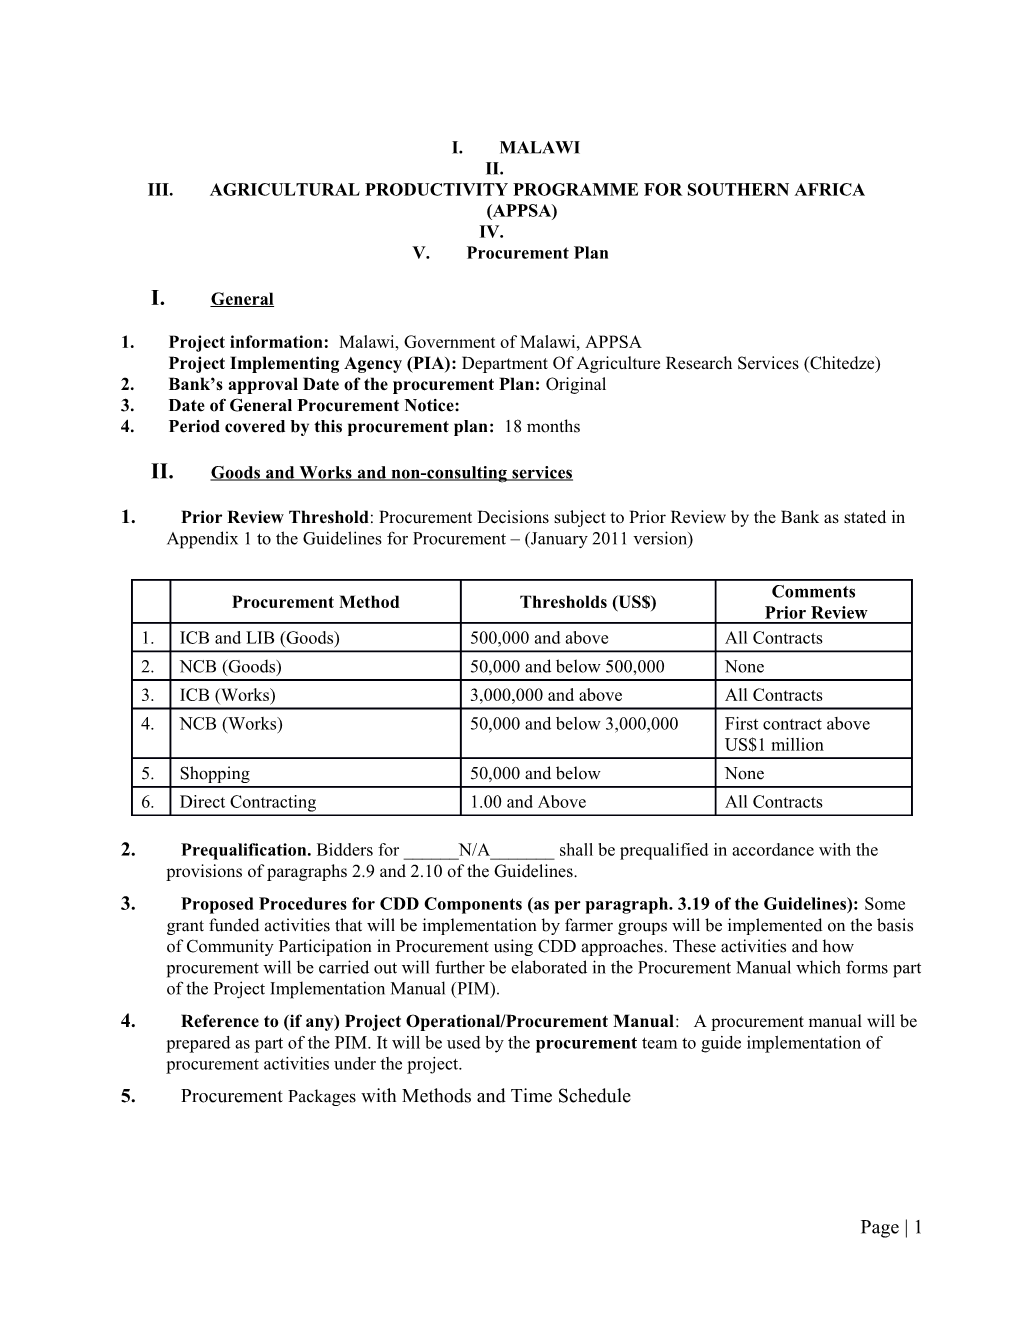 27 5 2016 12 48 7 Malawi - P094183 - APPSA - Approved Original Procurement Plan